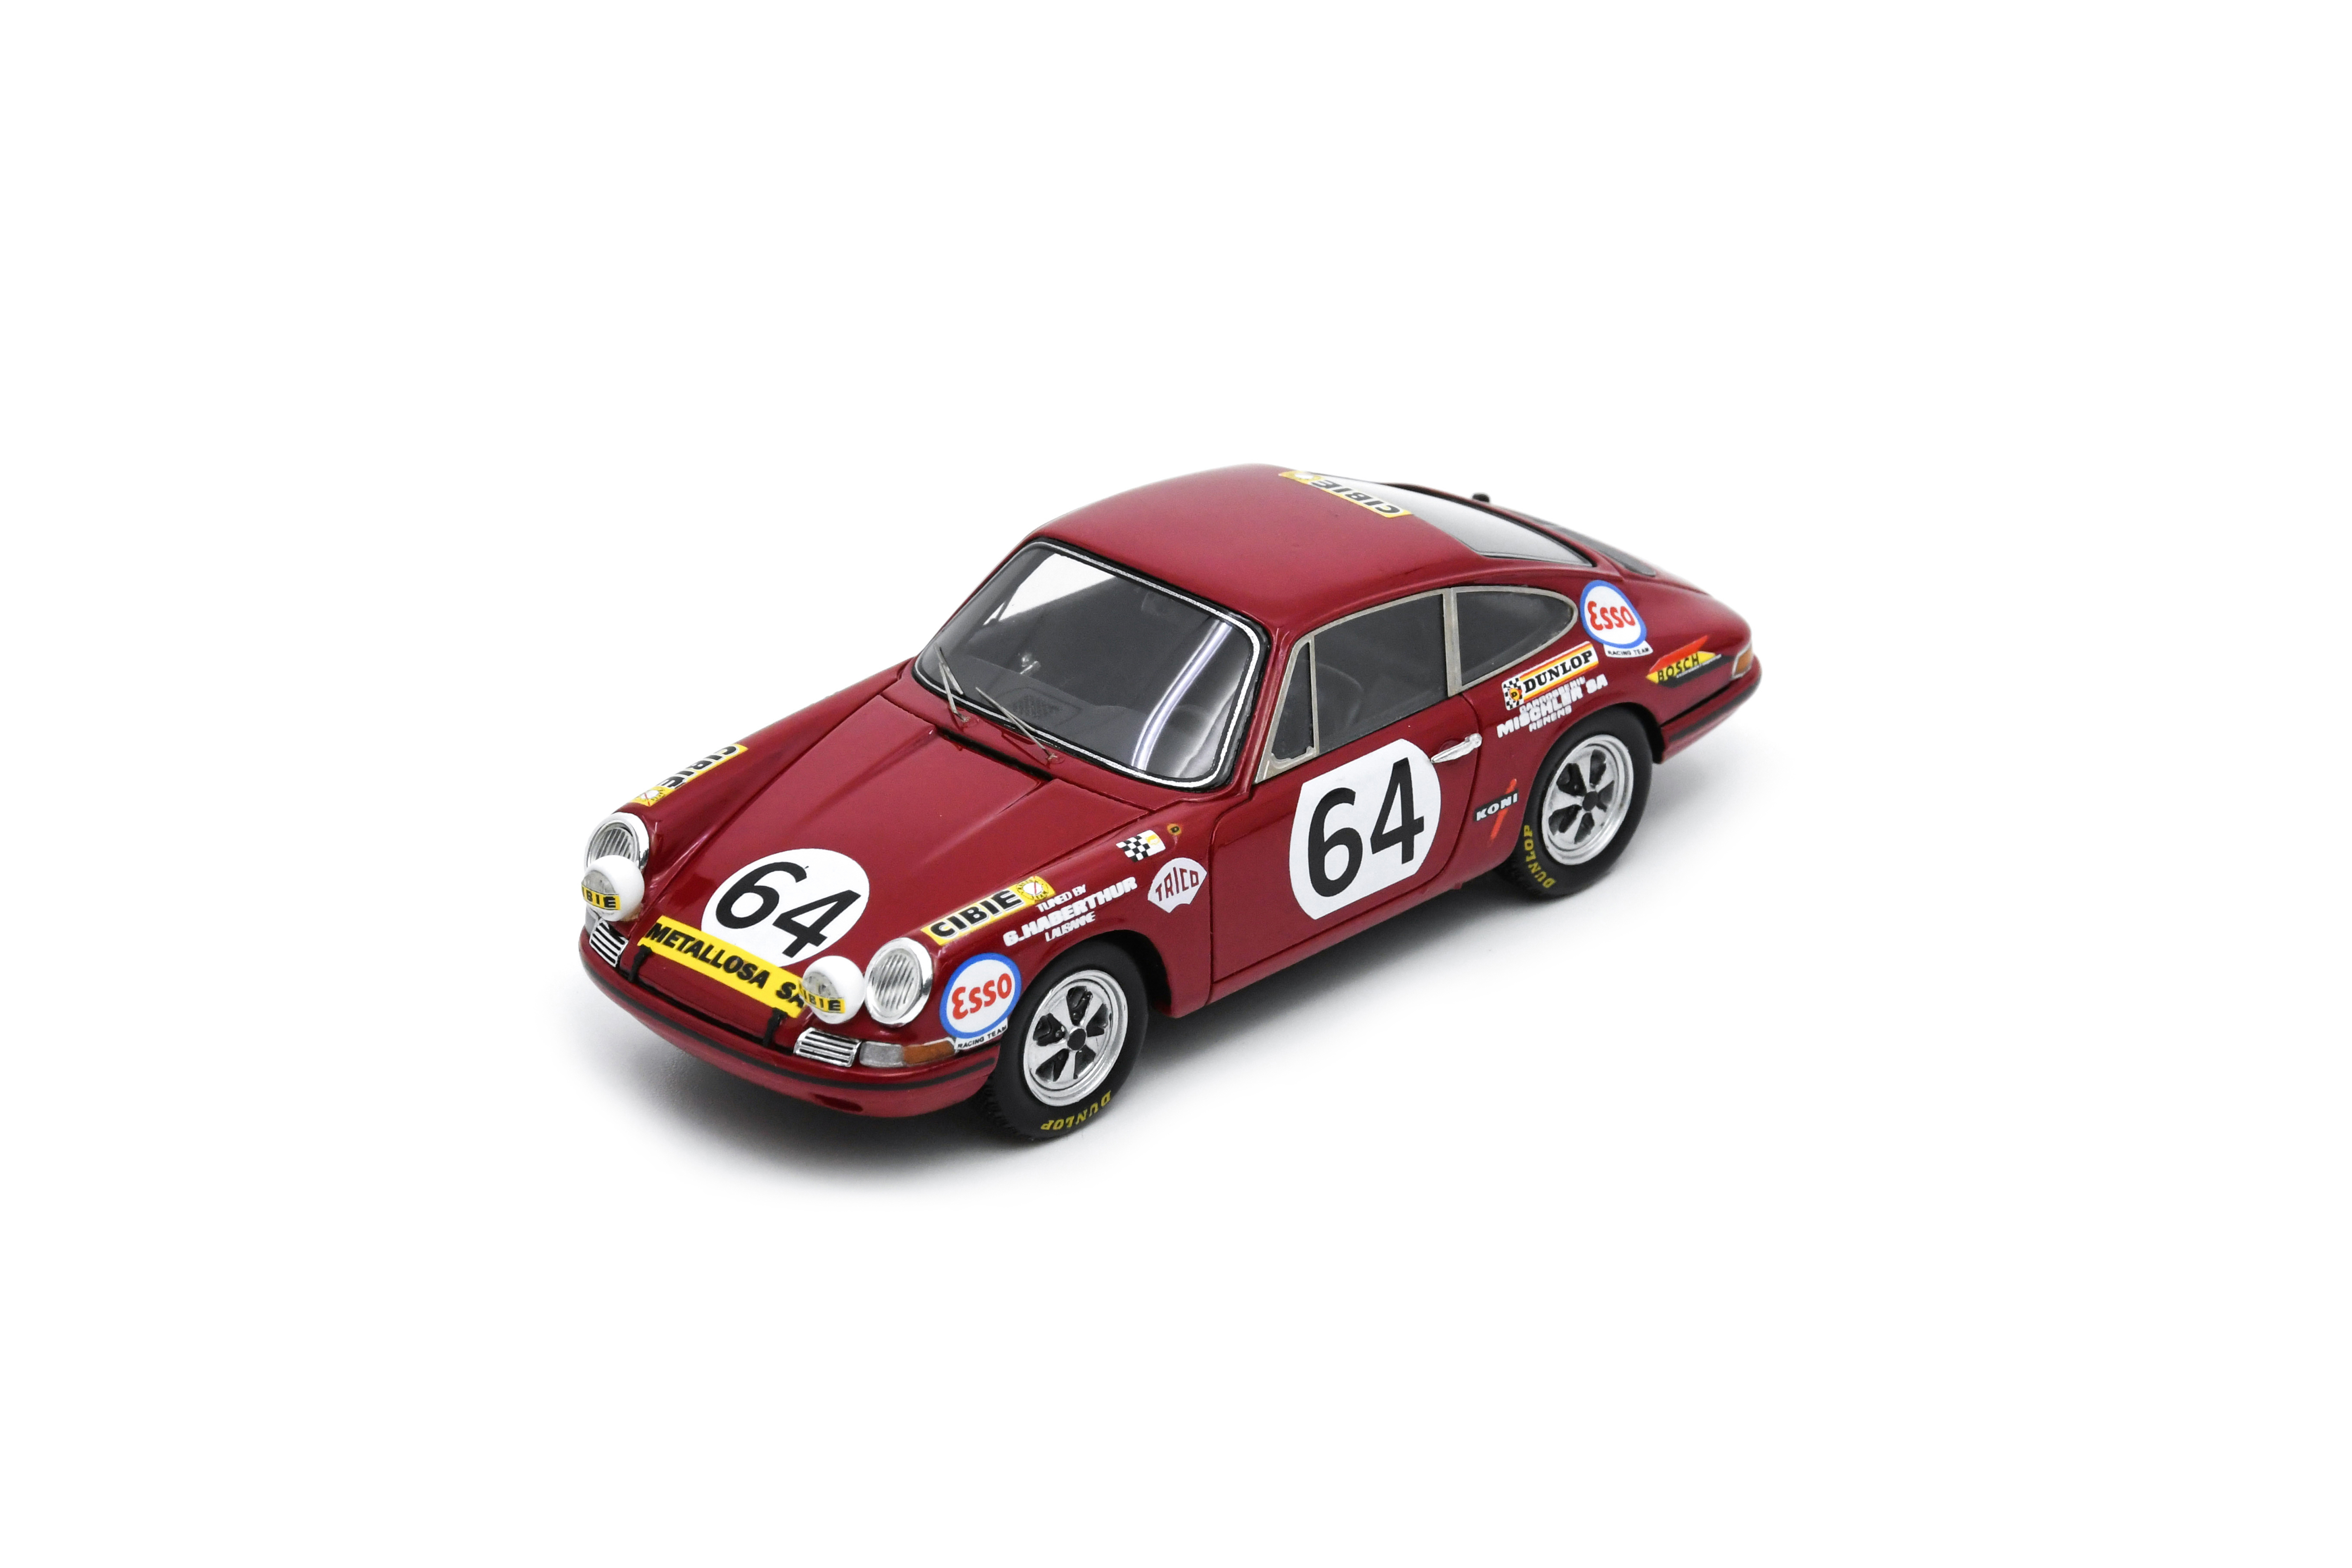 Porsche 911 #64 Le Mans 1970 1:43